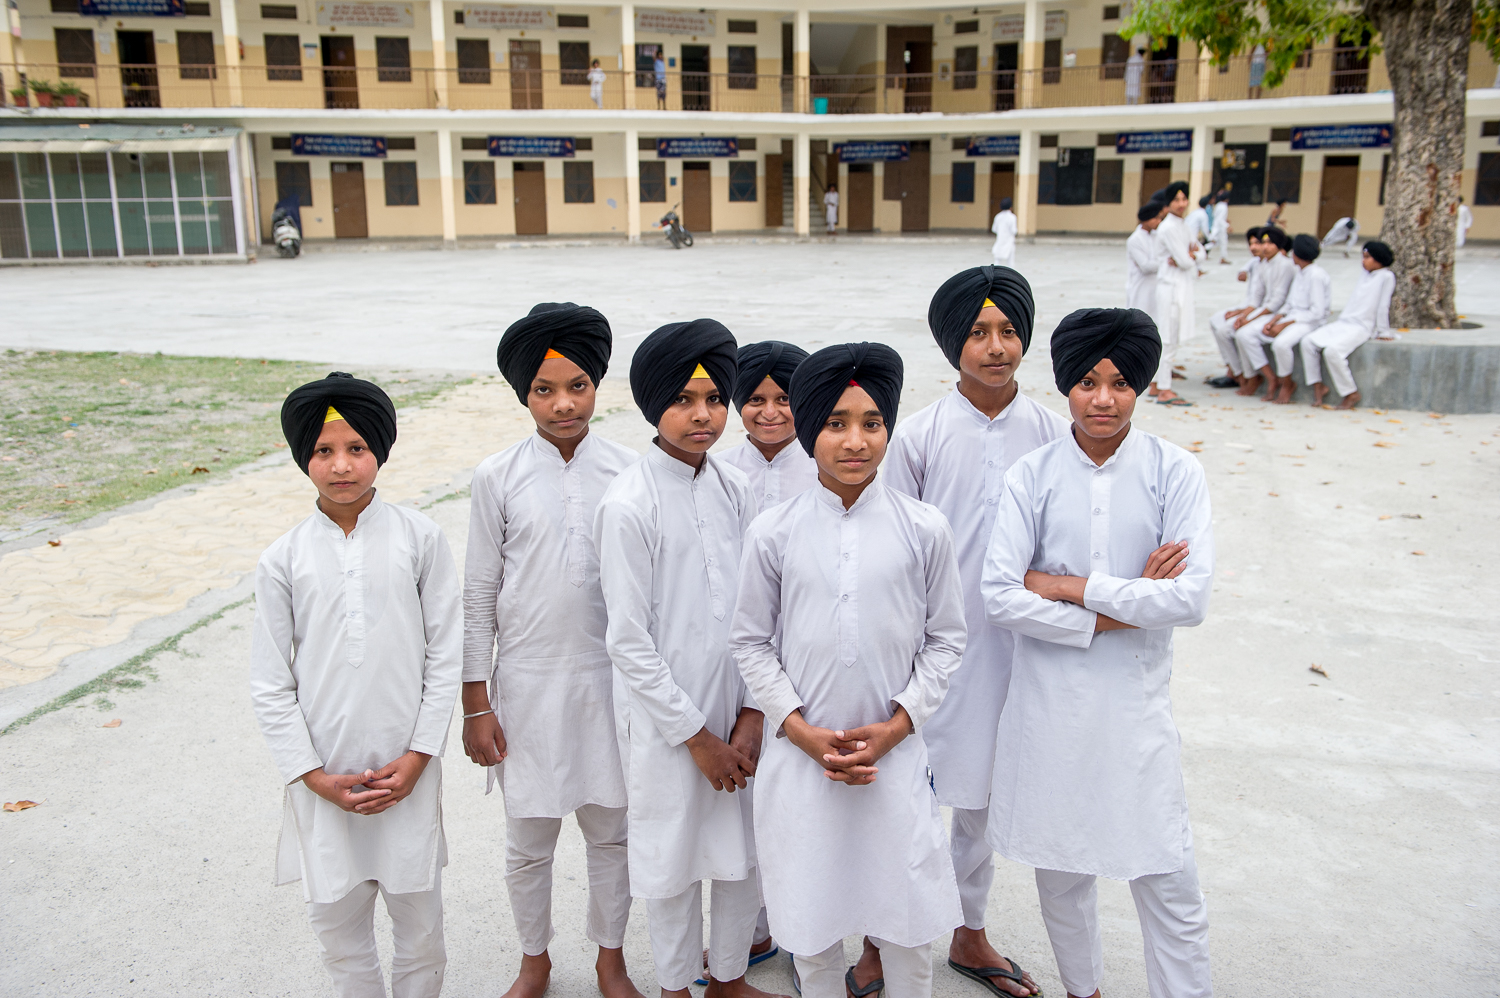  Sikh students, Rishikesh, 2019 